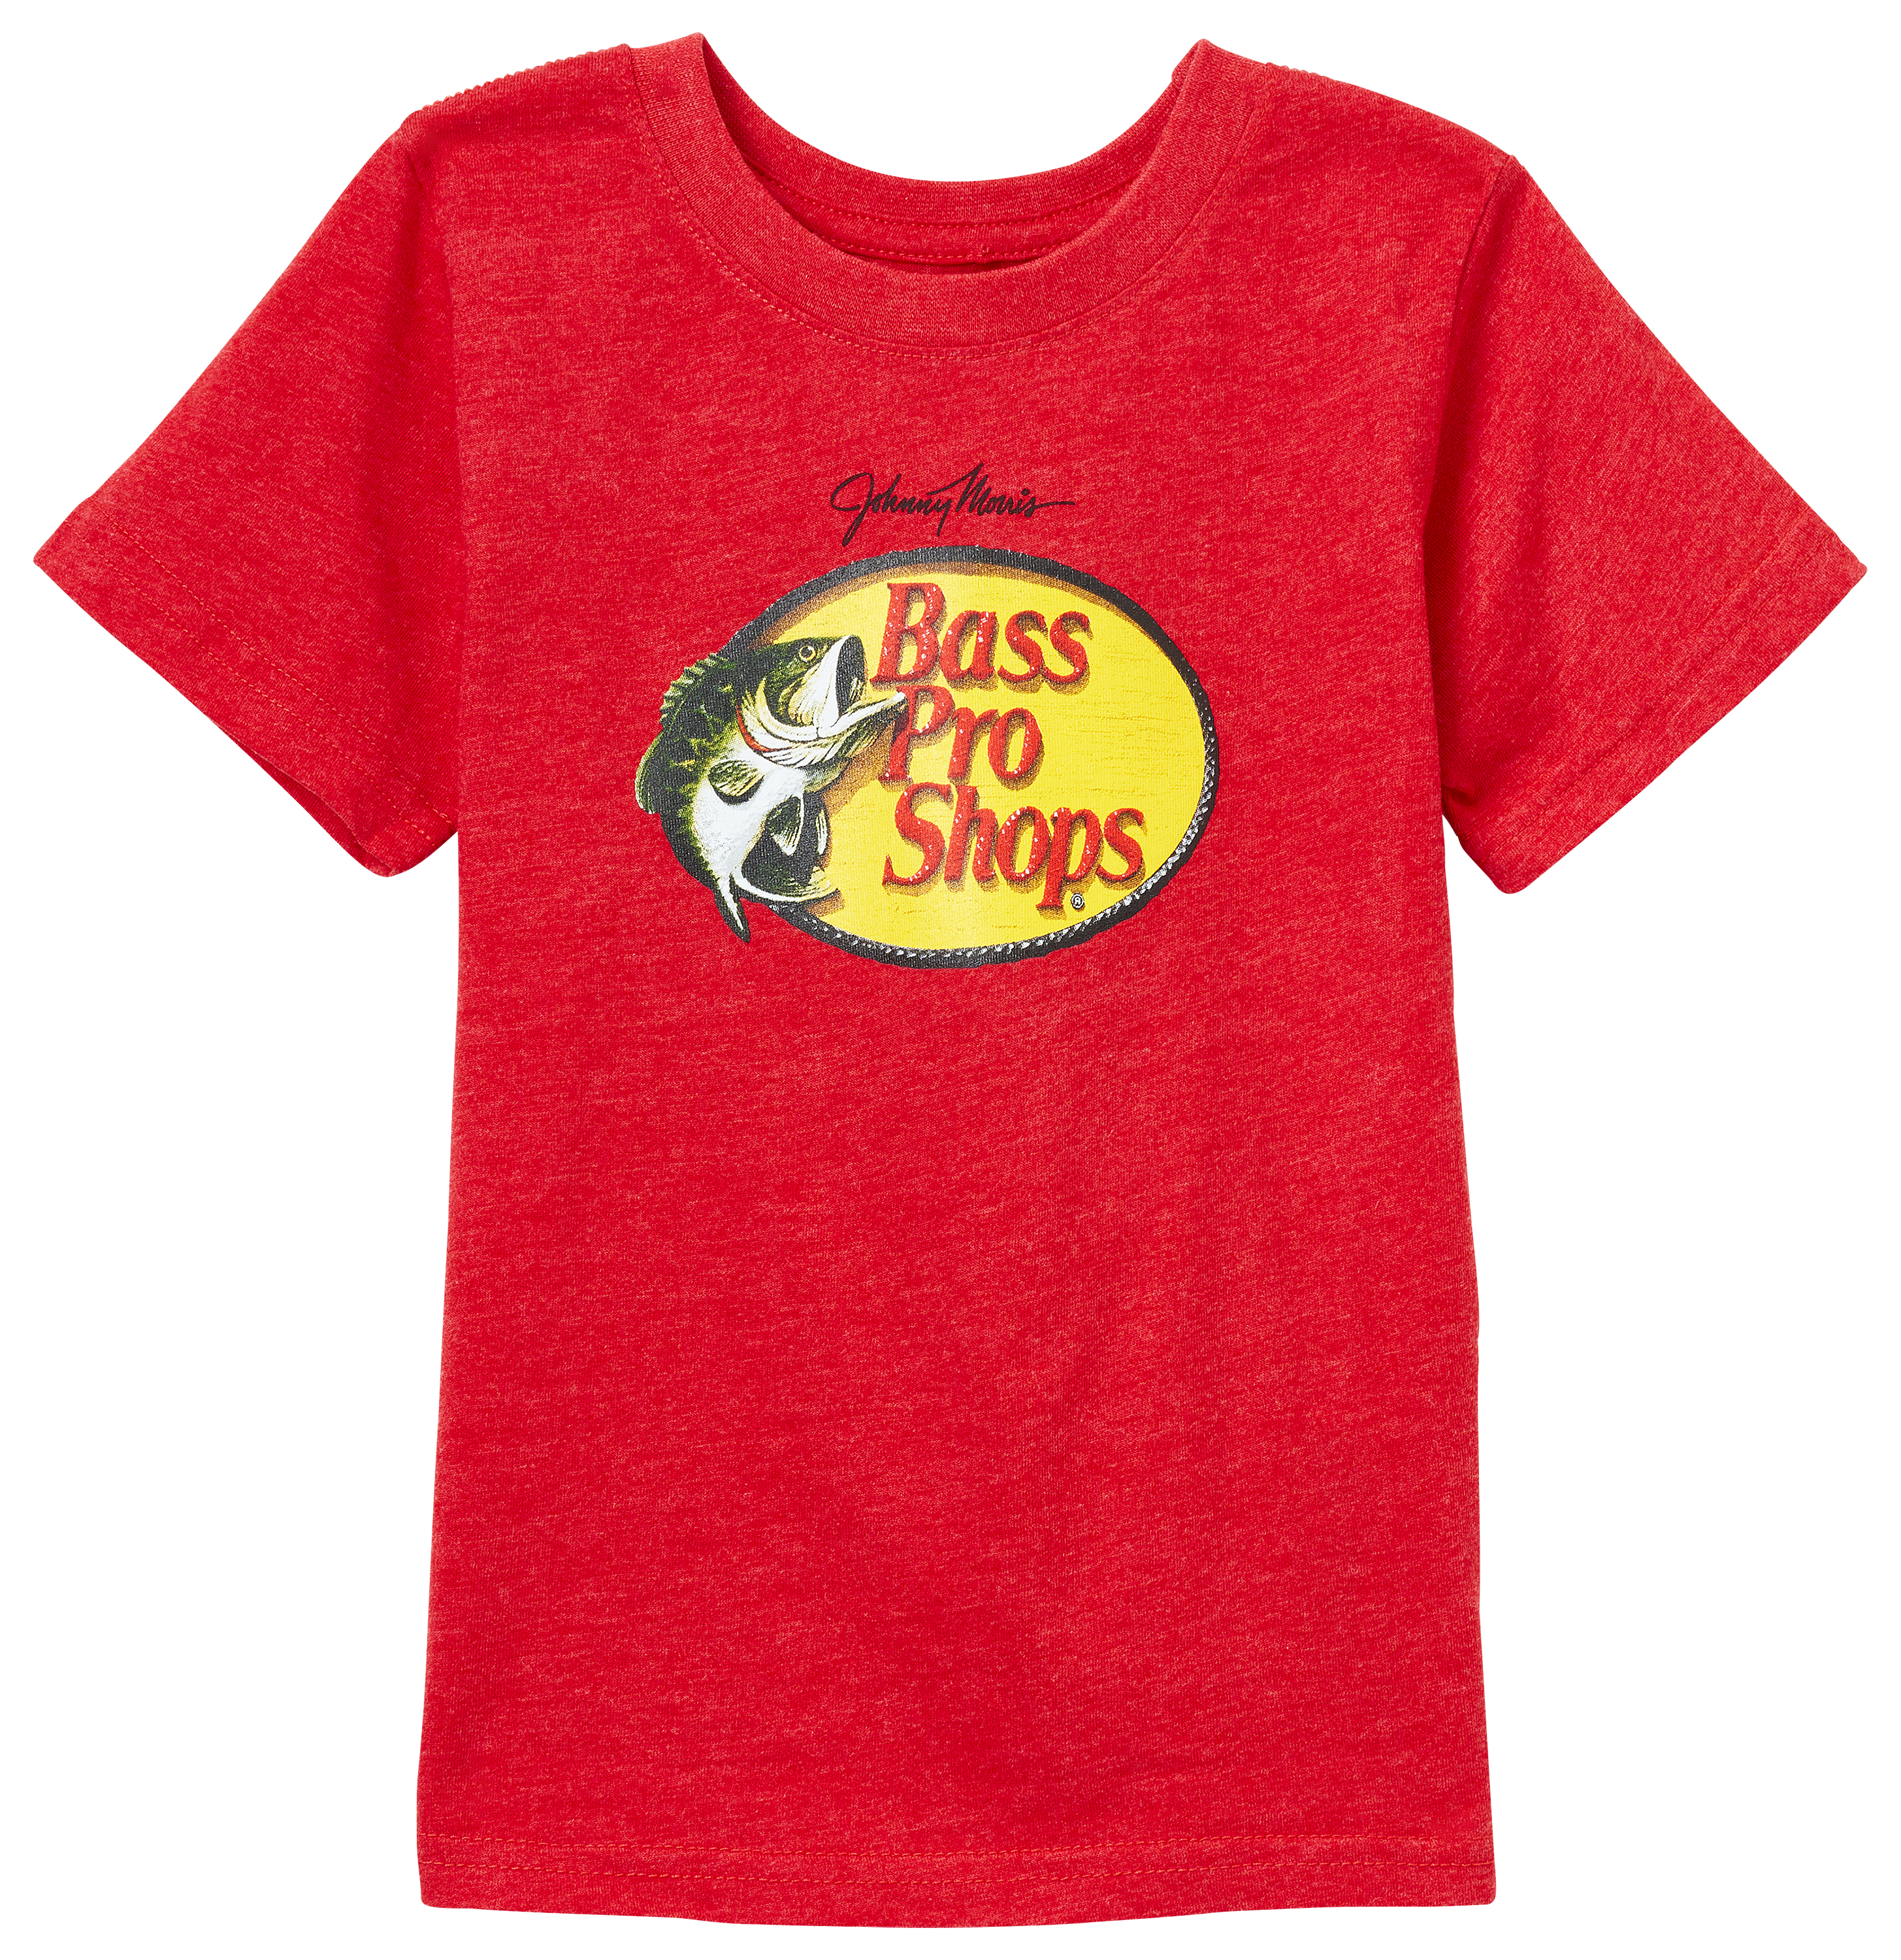 Bass Pro Shops Memphis Woodcut Short-Sleeve T-Shirt for Kids - Black - M